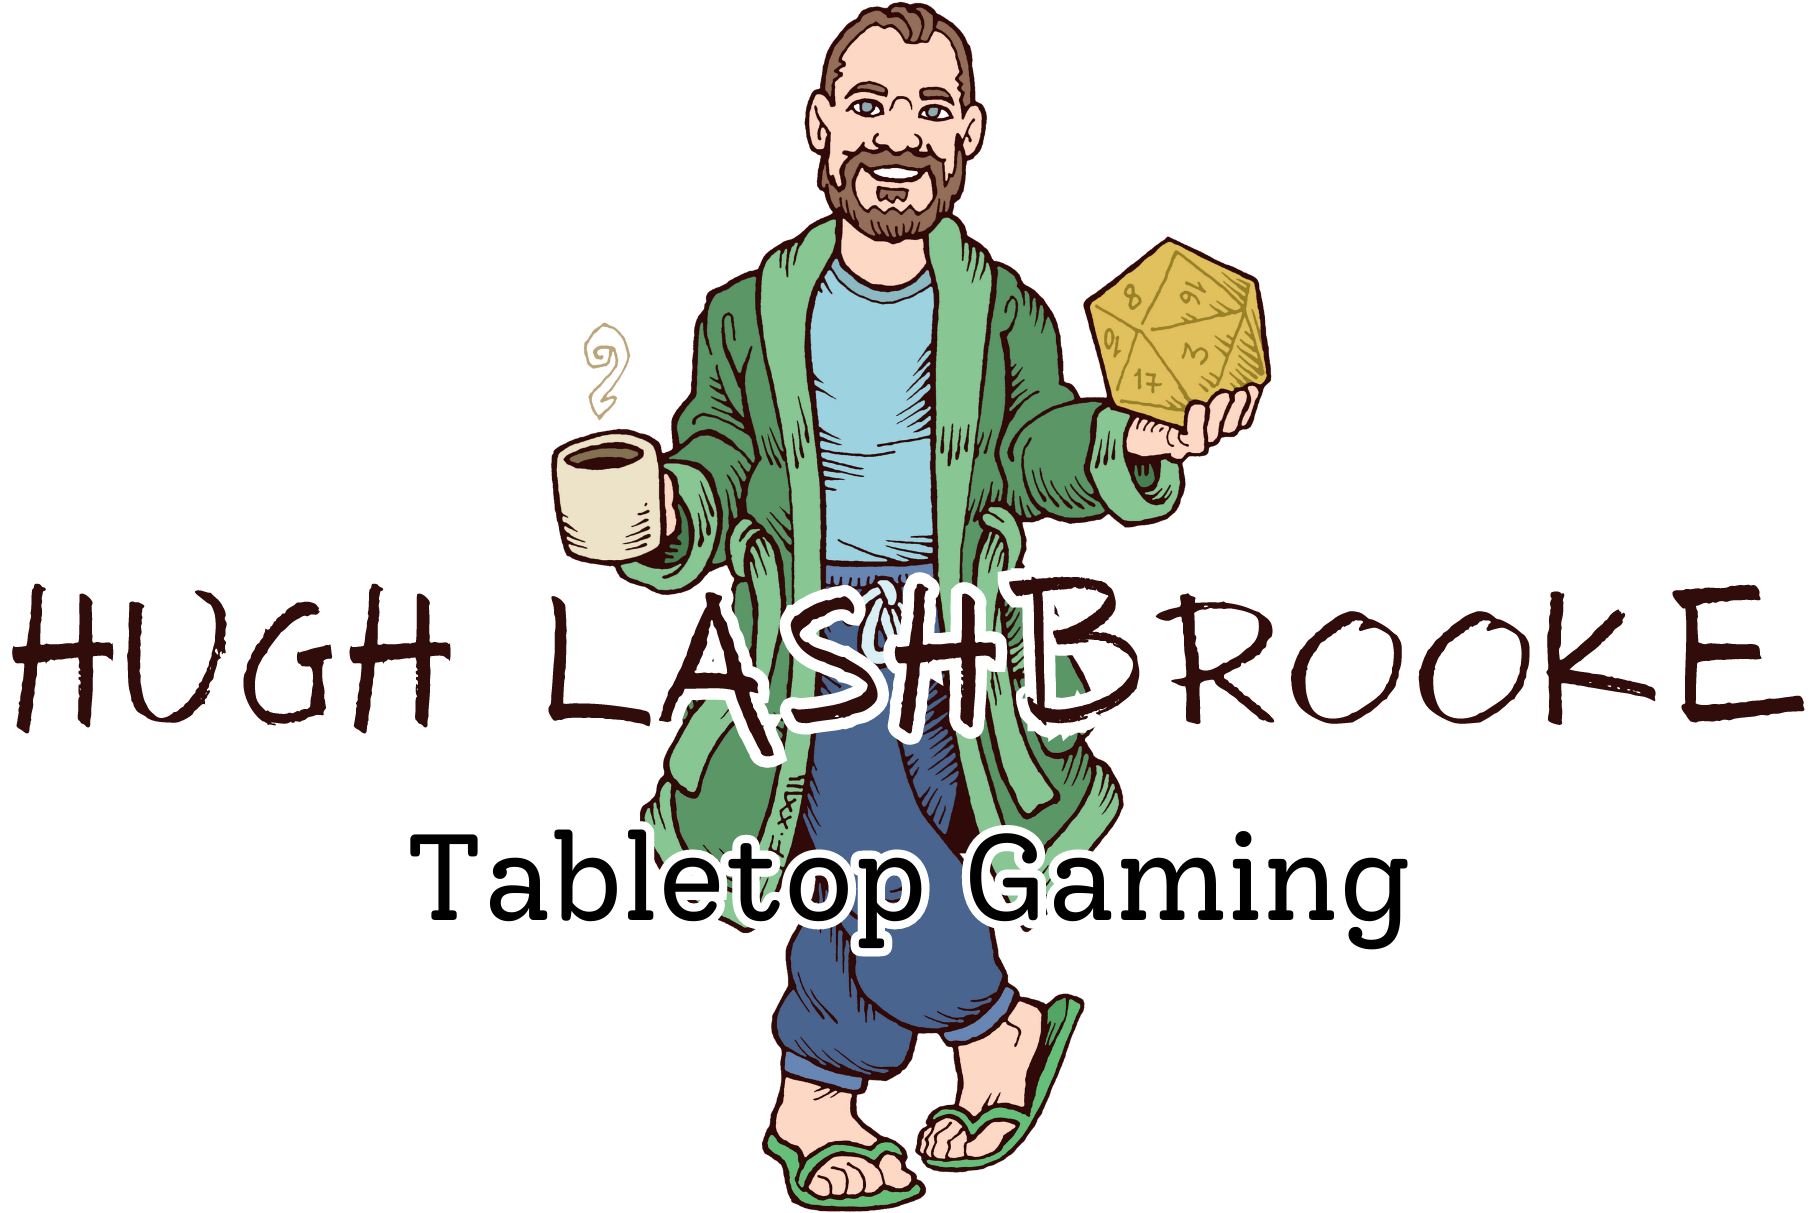 Hugh Lashbrooke: Tabletop Gaming